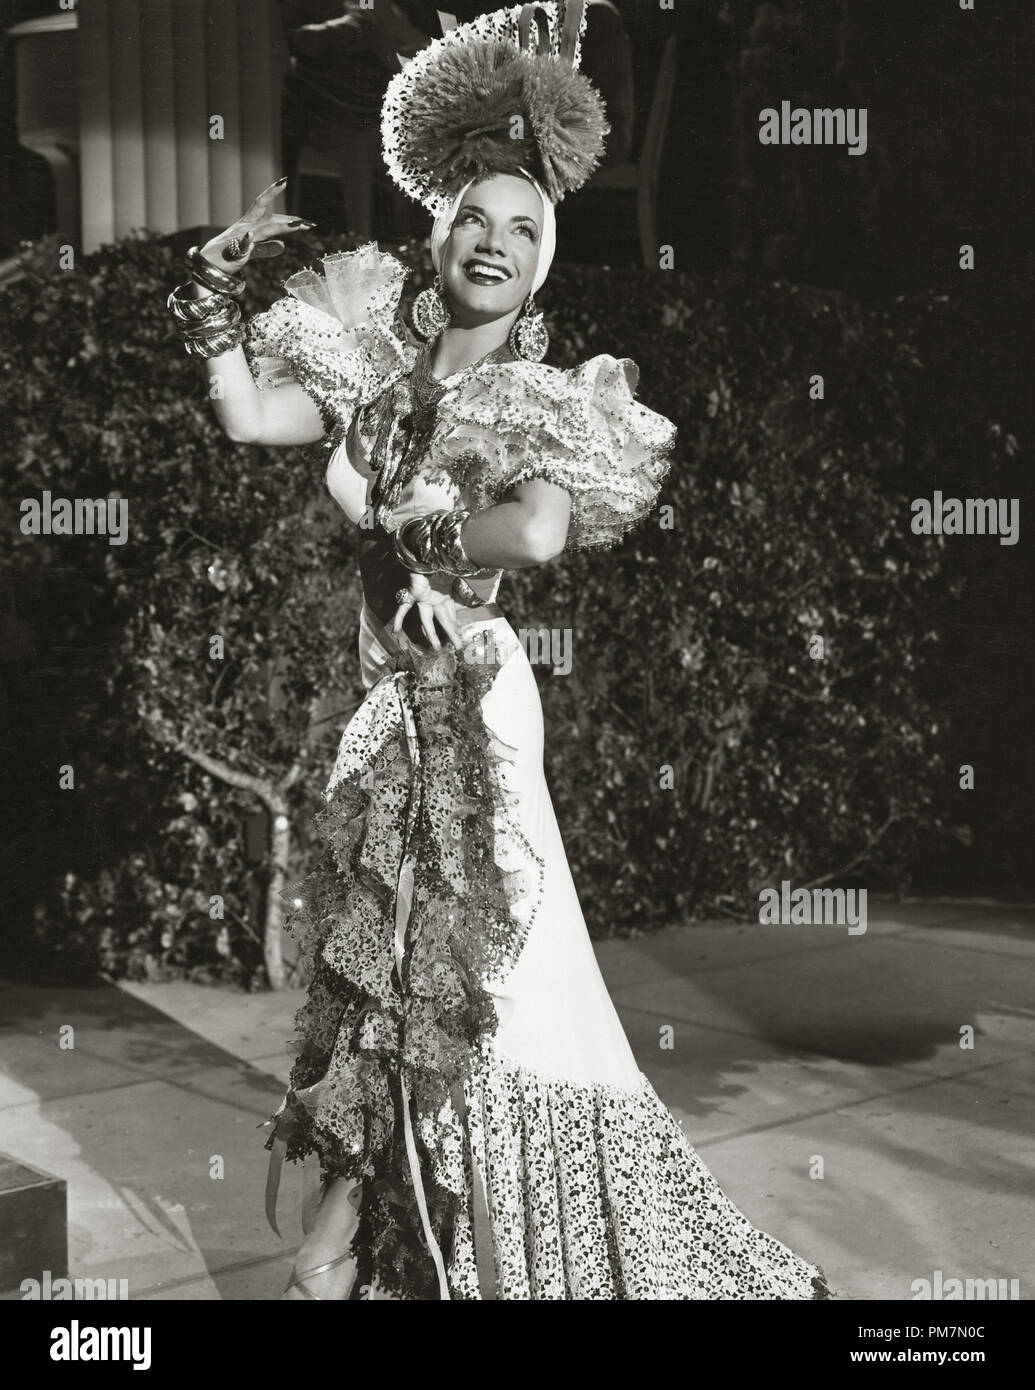 Carmen miranda costume hi-res stock photography and images - Alamy